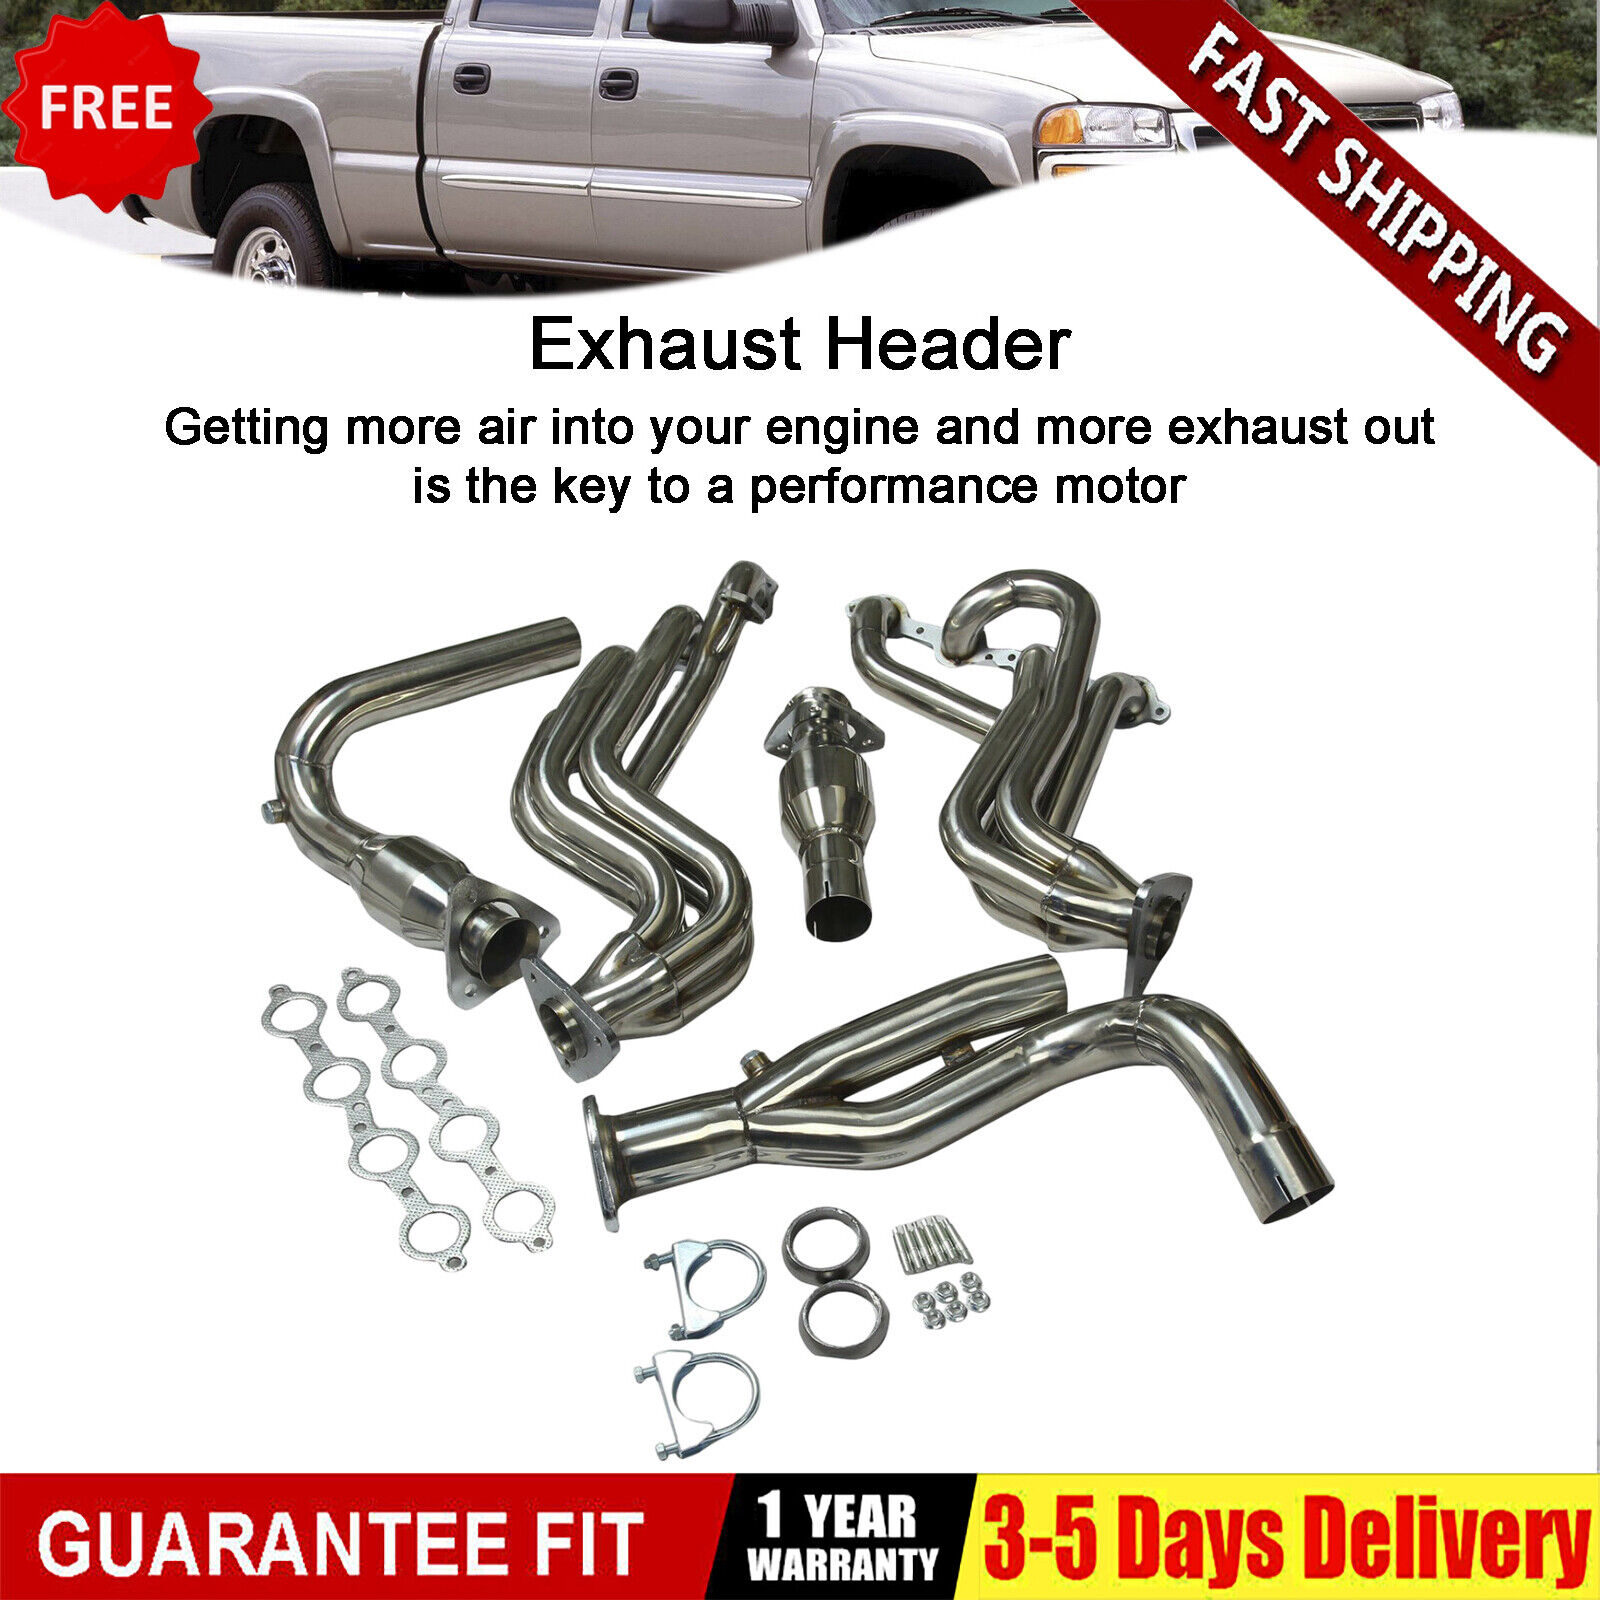 Stainless Exhaust Header Kit For GMC Yukon XL 1500 & Chevy Suburban 1500 / Tahoe